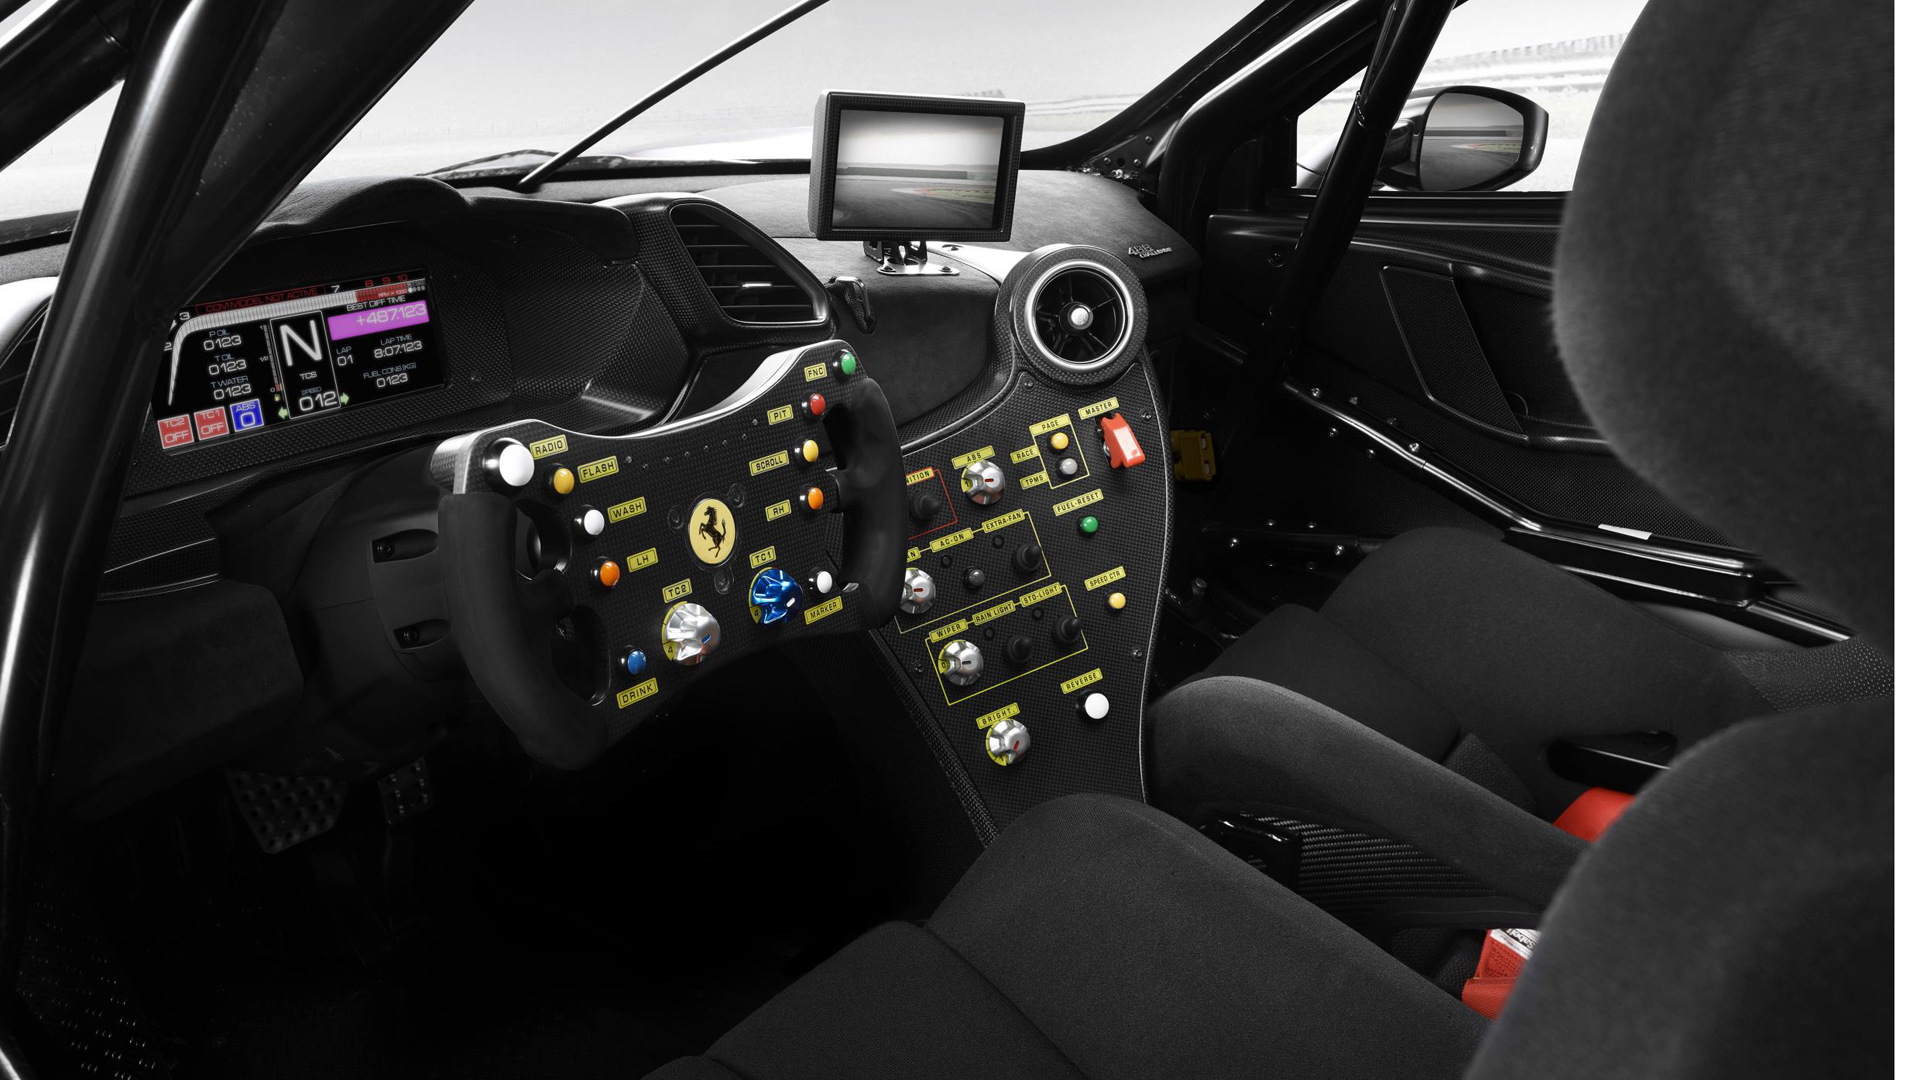 2020 Ferrari 488 Challenge Evo race car